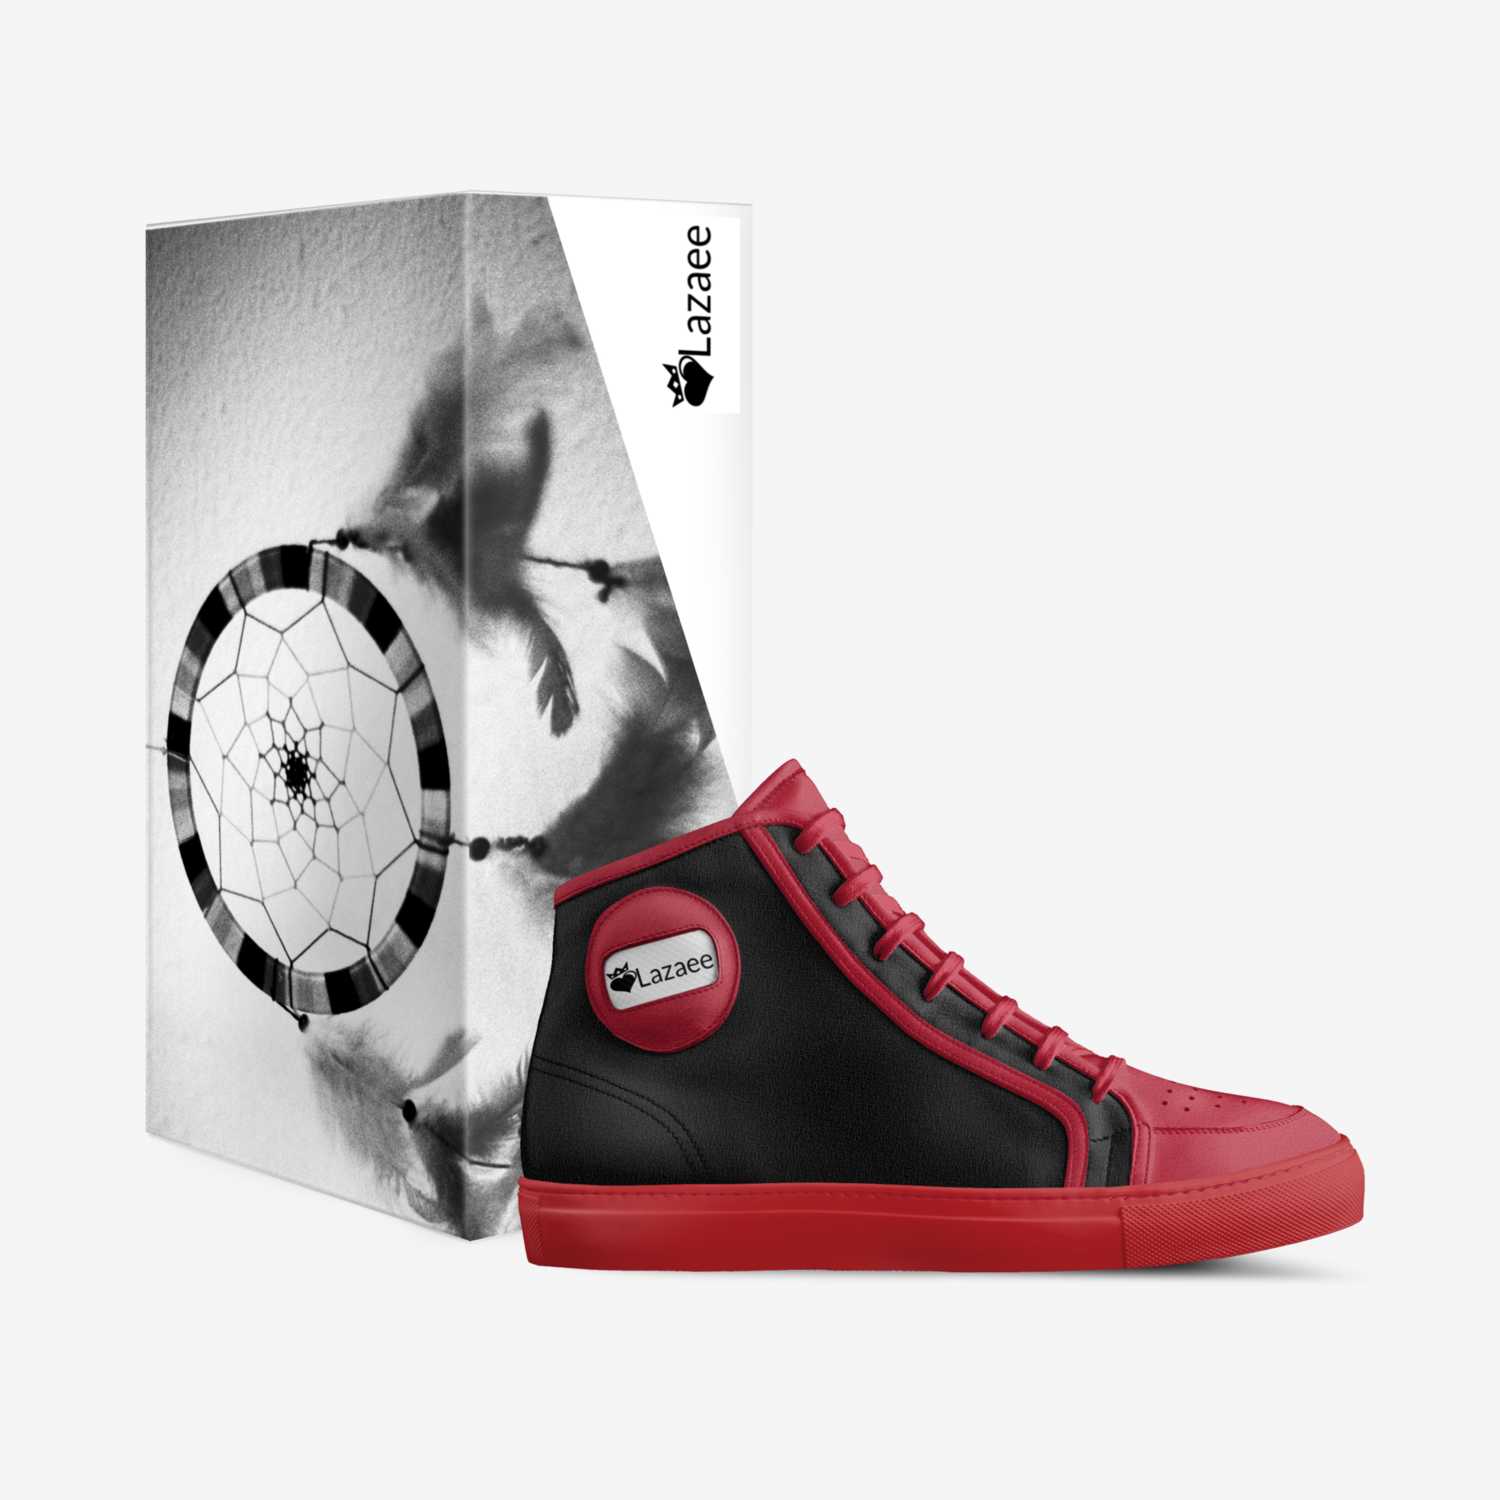 `Lazaee custom made in Italy shoes by Daneisha Hicks | Box view